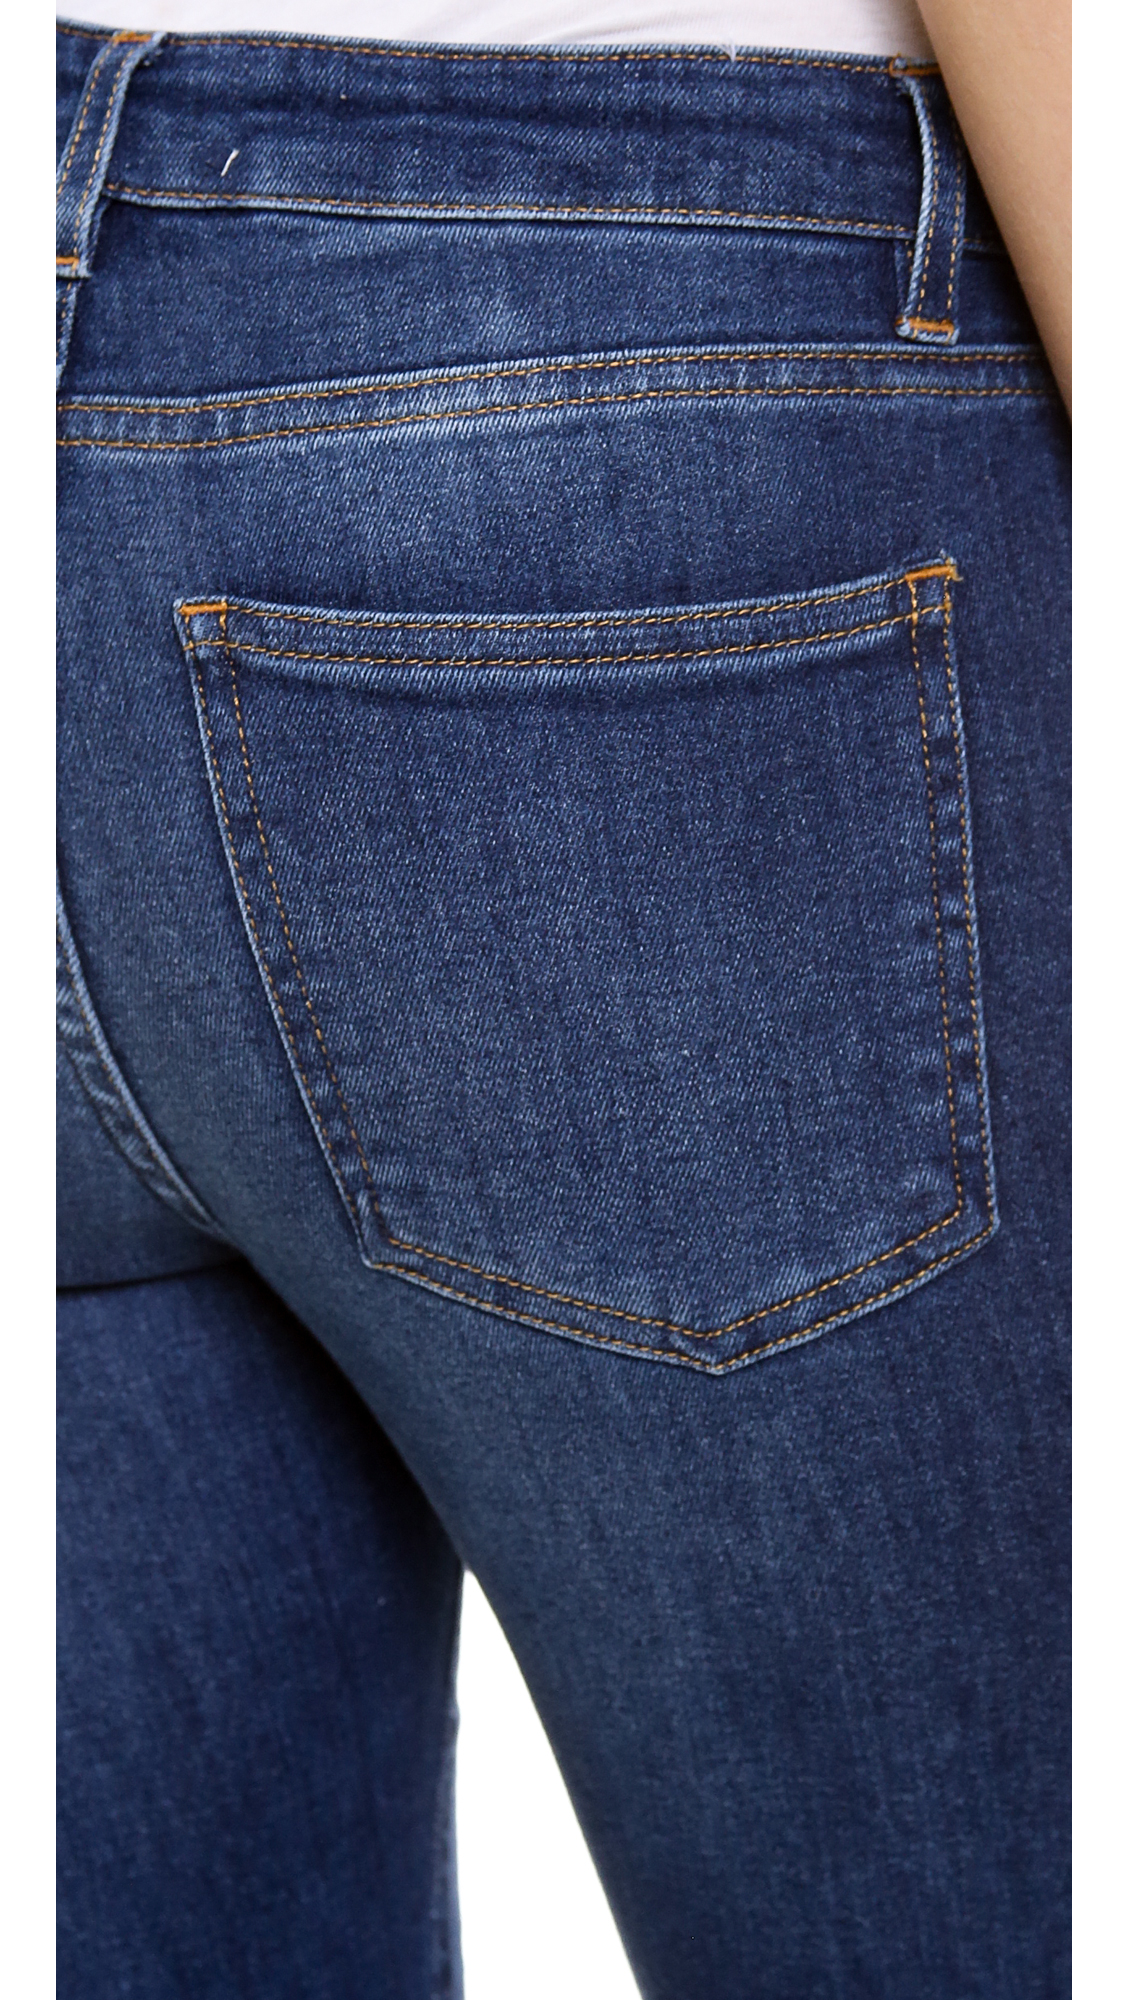 Acne Studios Skin 5 Jeans - Used Blue | Lyst